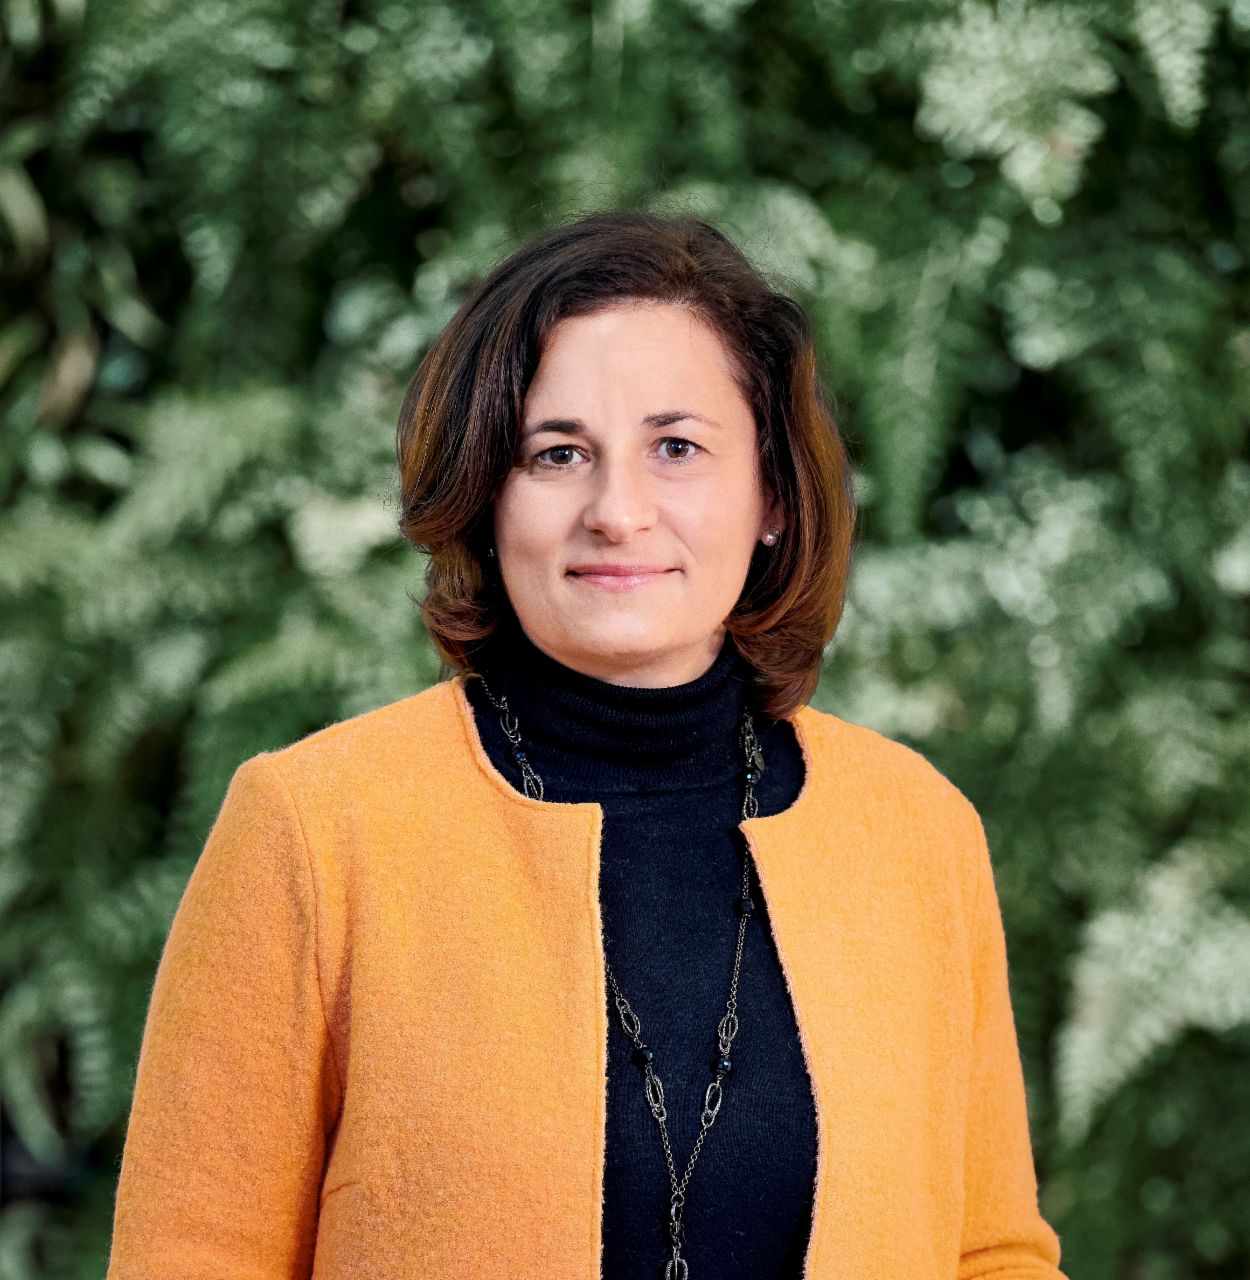 Portrait von Helga Wuertele, Head of Sustainability bei TRATON in farbe.